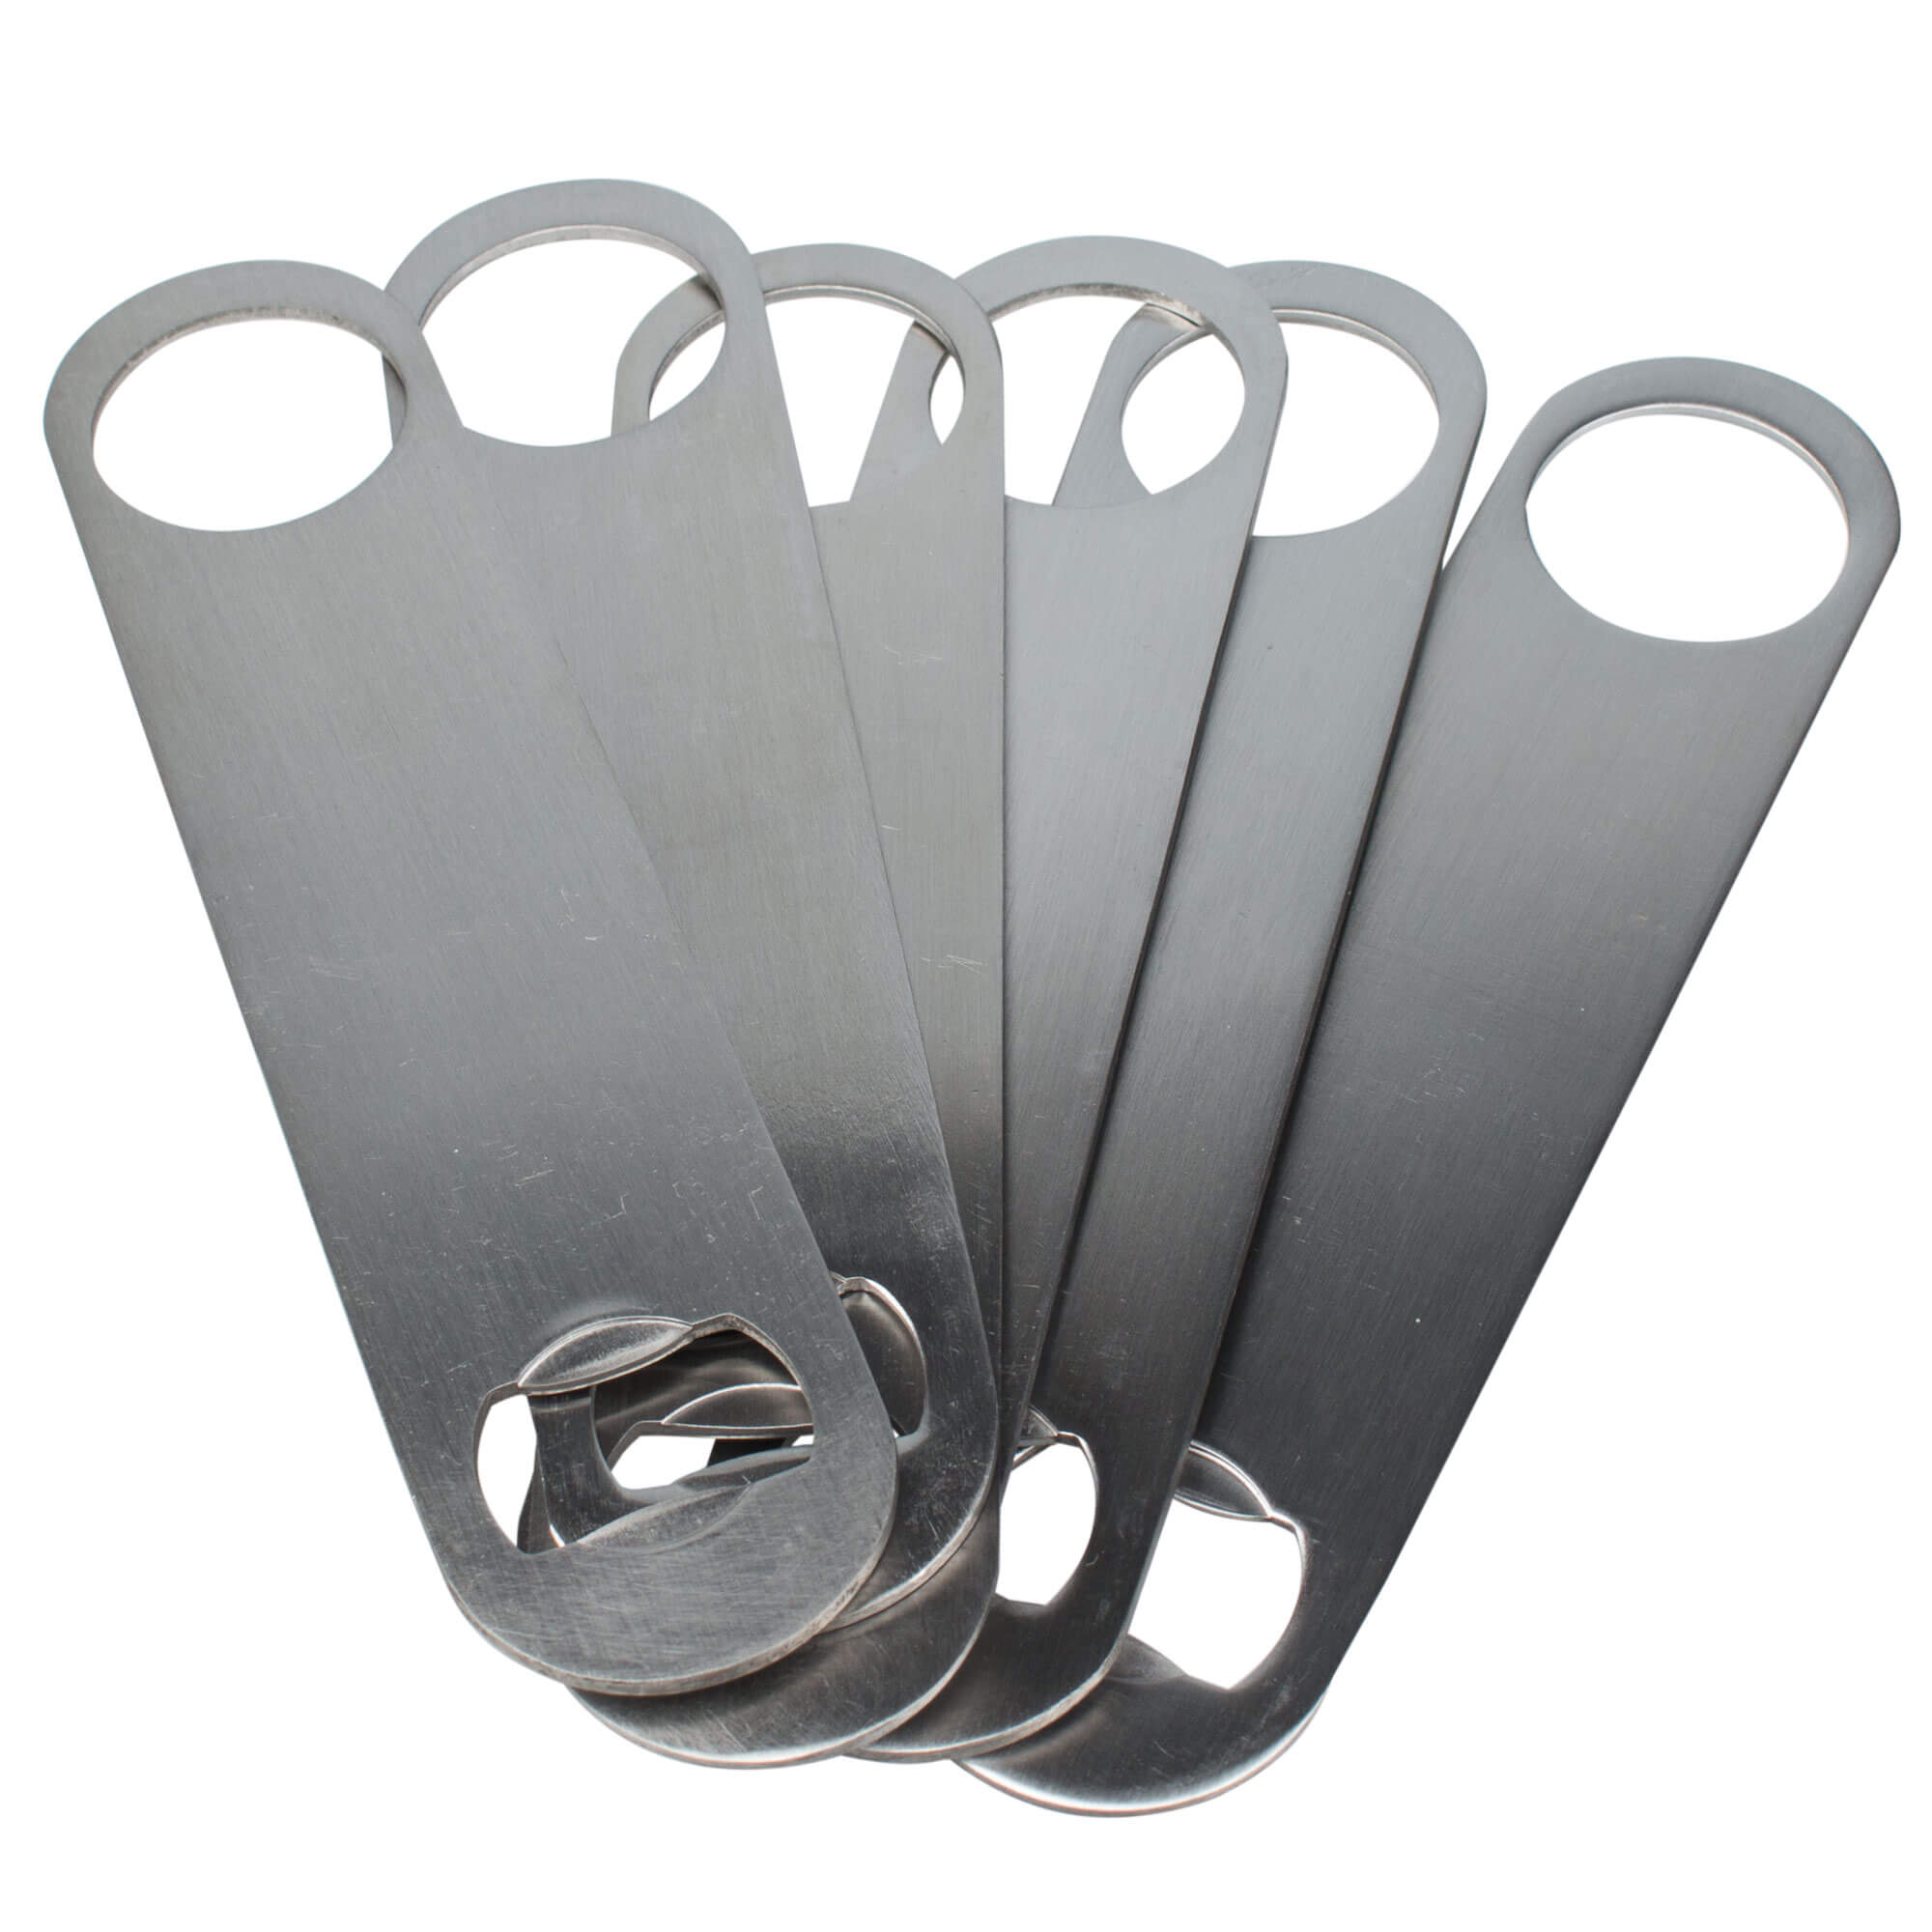 Cap lifter / Speed opener, stainless steel, 18cm - irregular stock (6 pcs.)